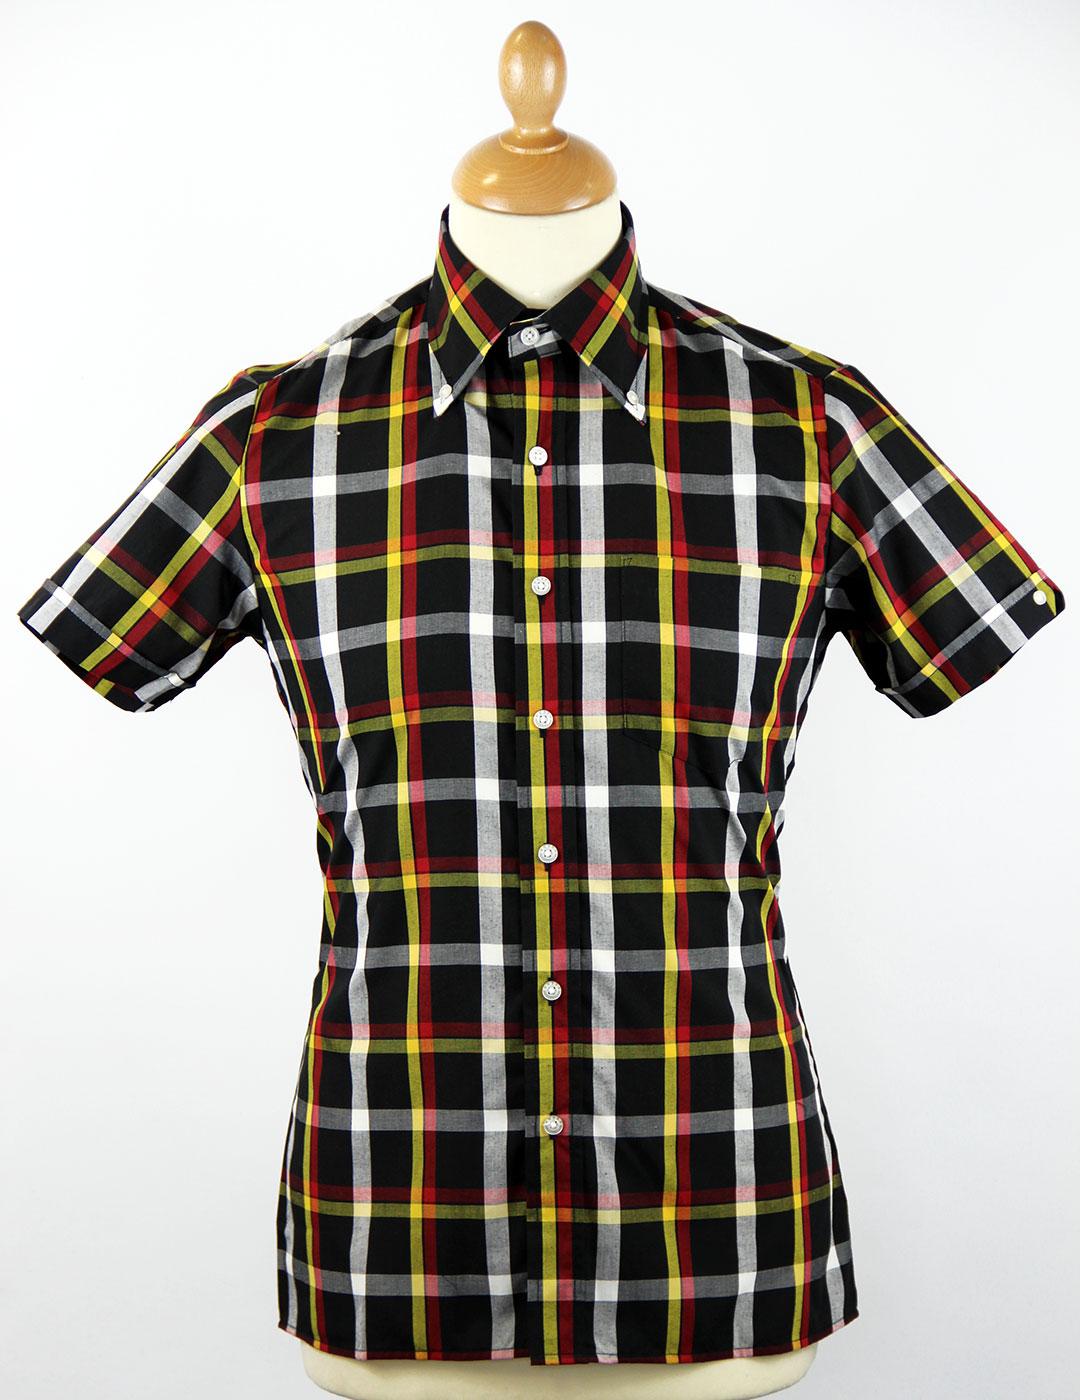 BRUTUS TRIMFIT Black/Yellow Mod Tartan Check Shirt